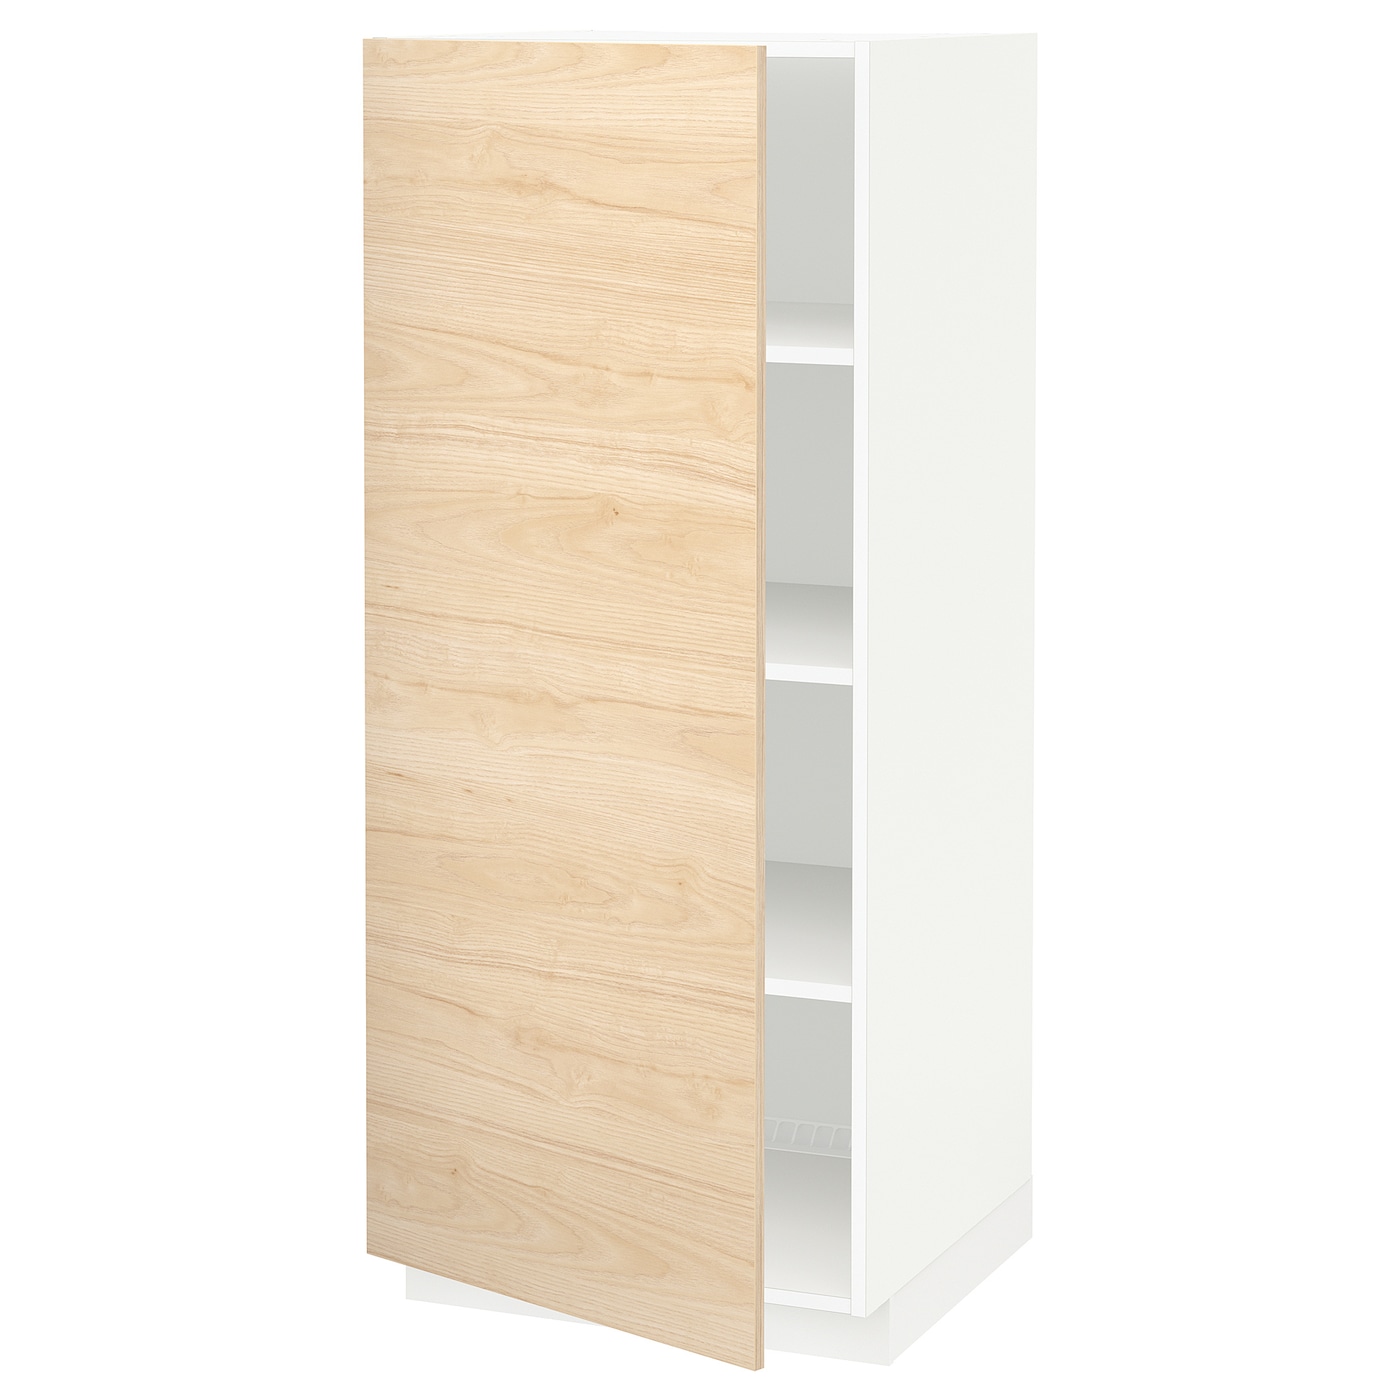 Высокий шкаф - IKEA METOD/МЕТОД ИКЕА, 140х60х60 см, белый/под беленый дуб